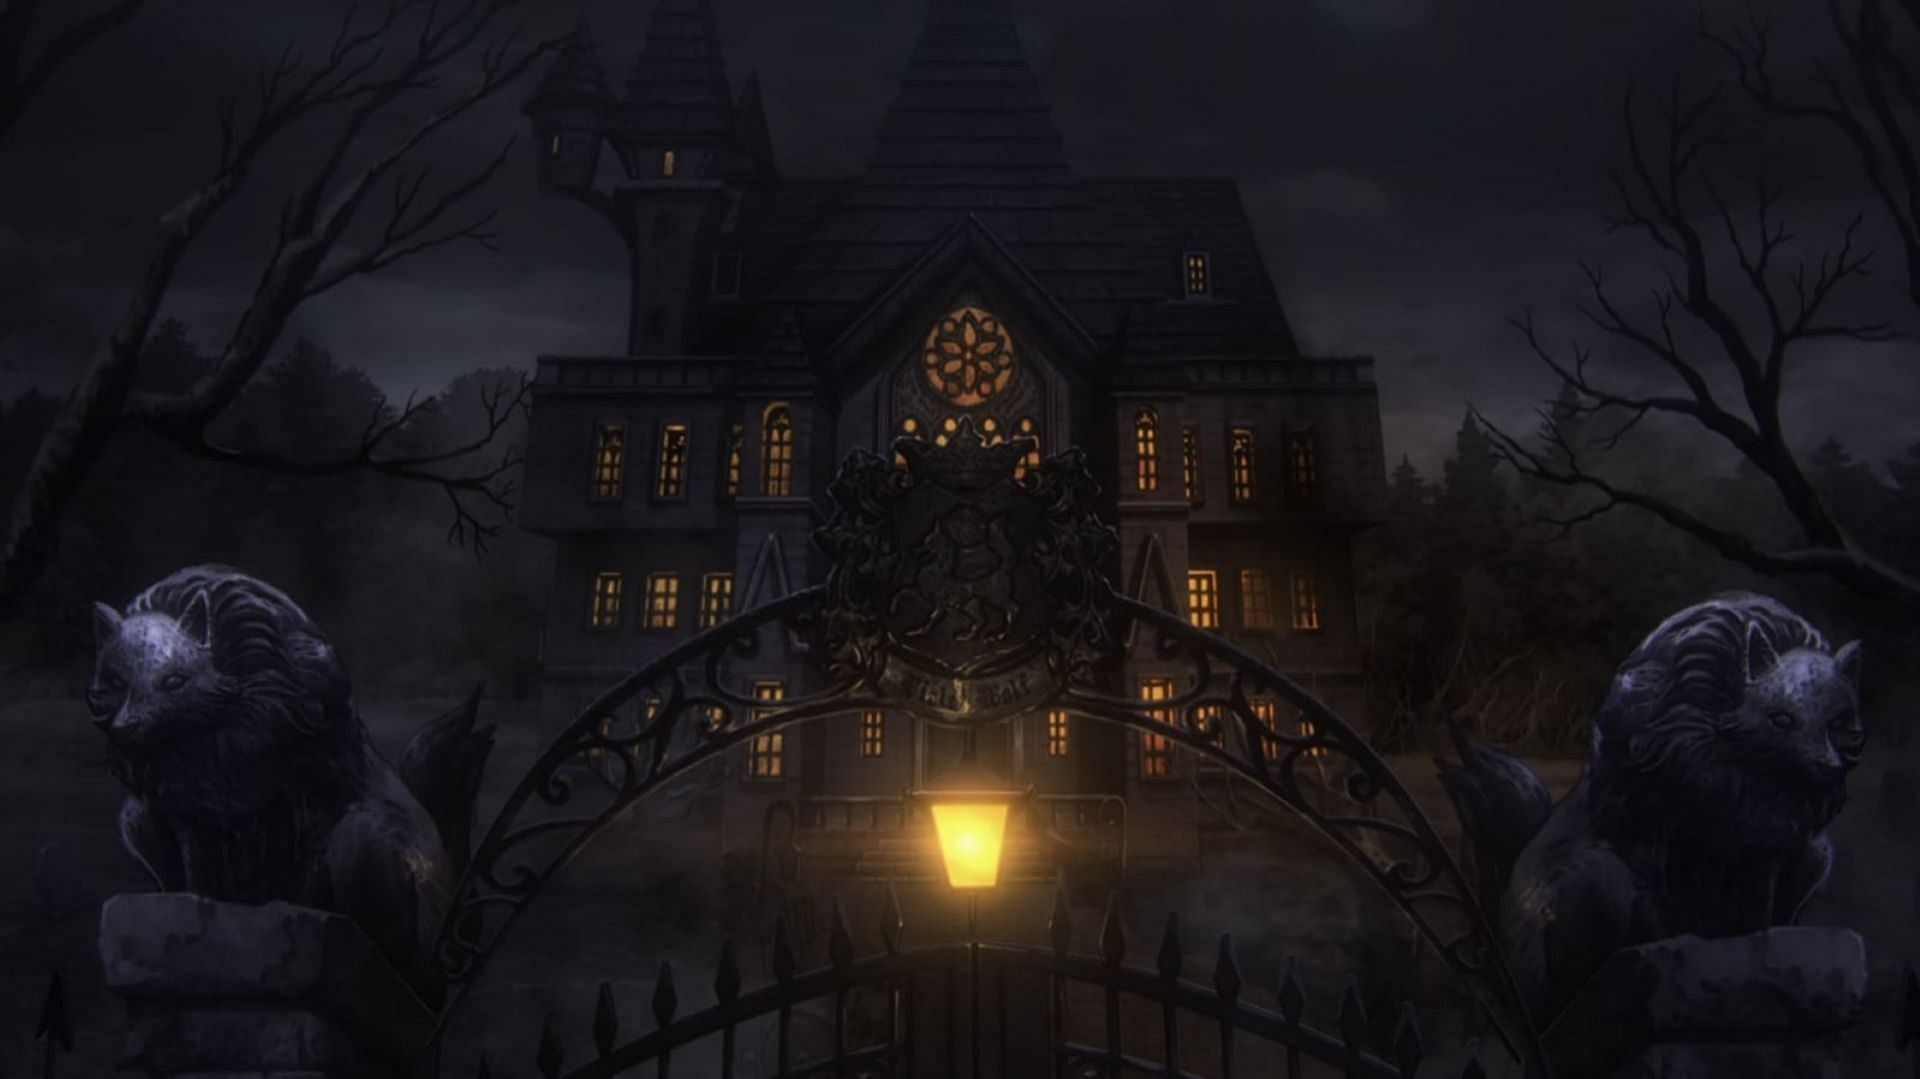 Violet Wolf house, as seen in Black Butler season 4 episode 4 (Image via Cloverworks)